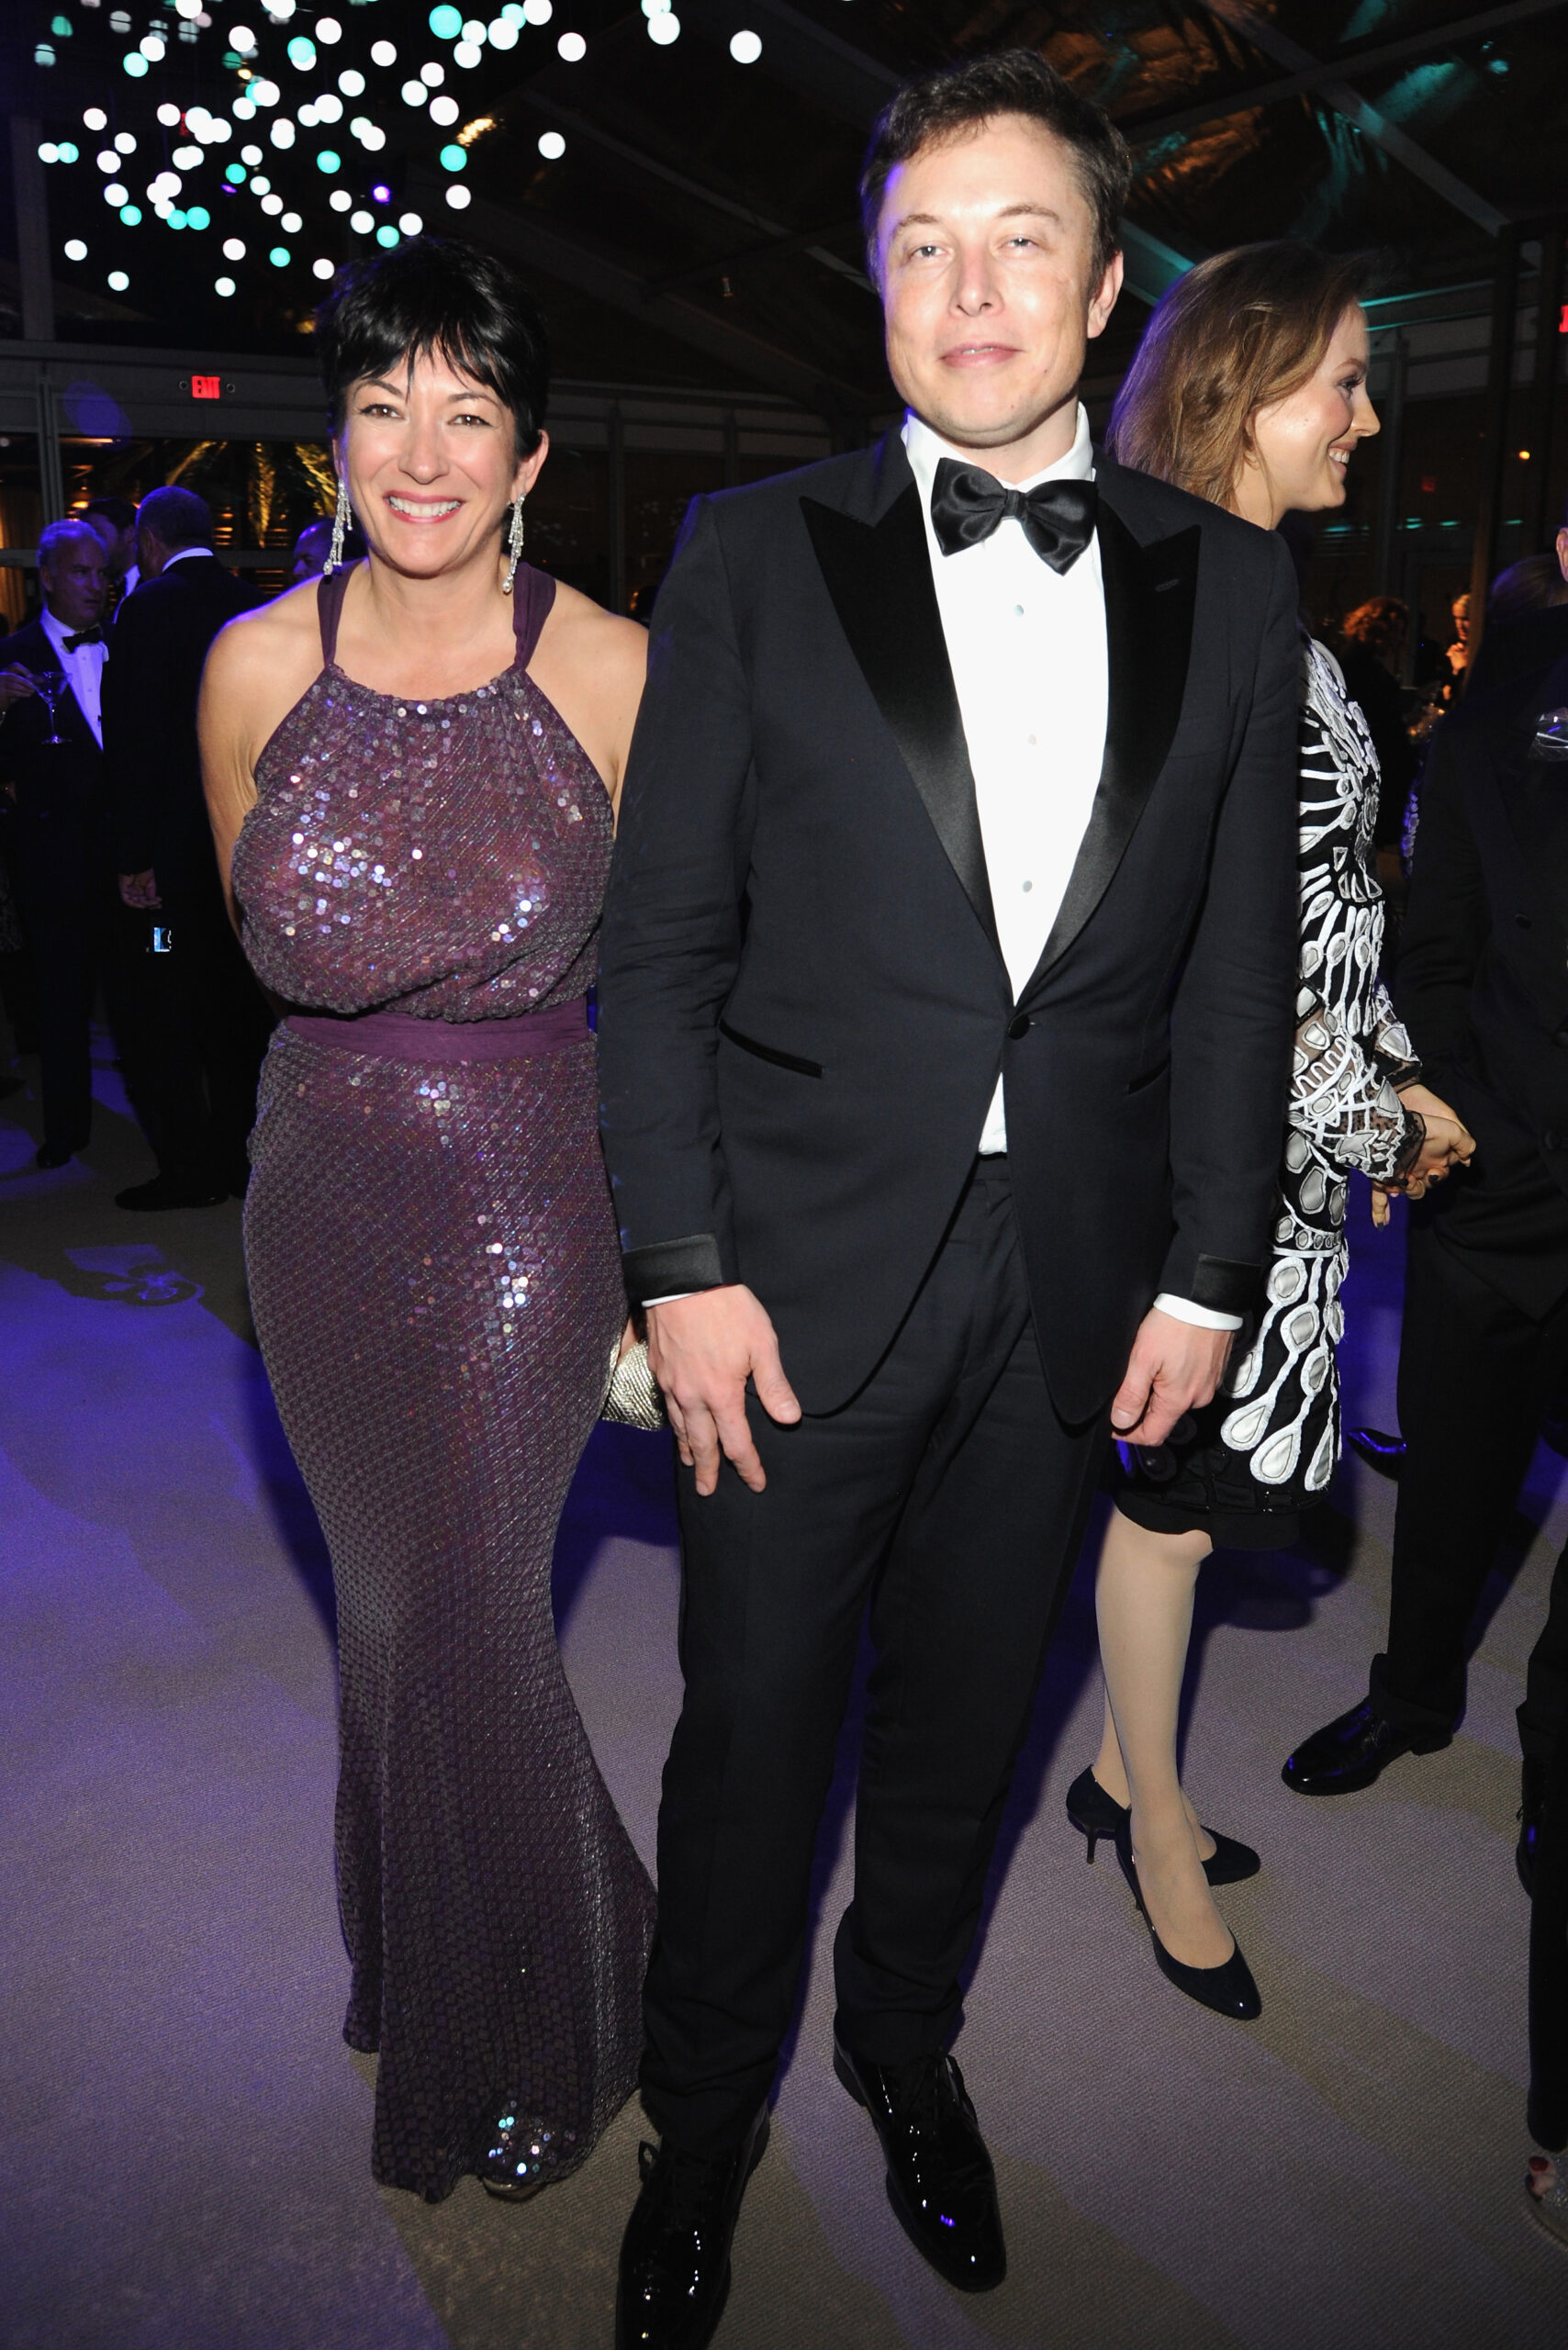 Elon Musk y Ghislaine Maxwell, socia de Jeffrey Epstein, aparecen en una foto o imagen de 2014.